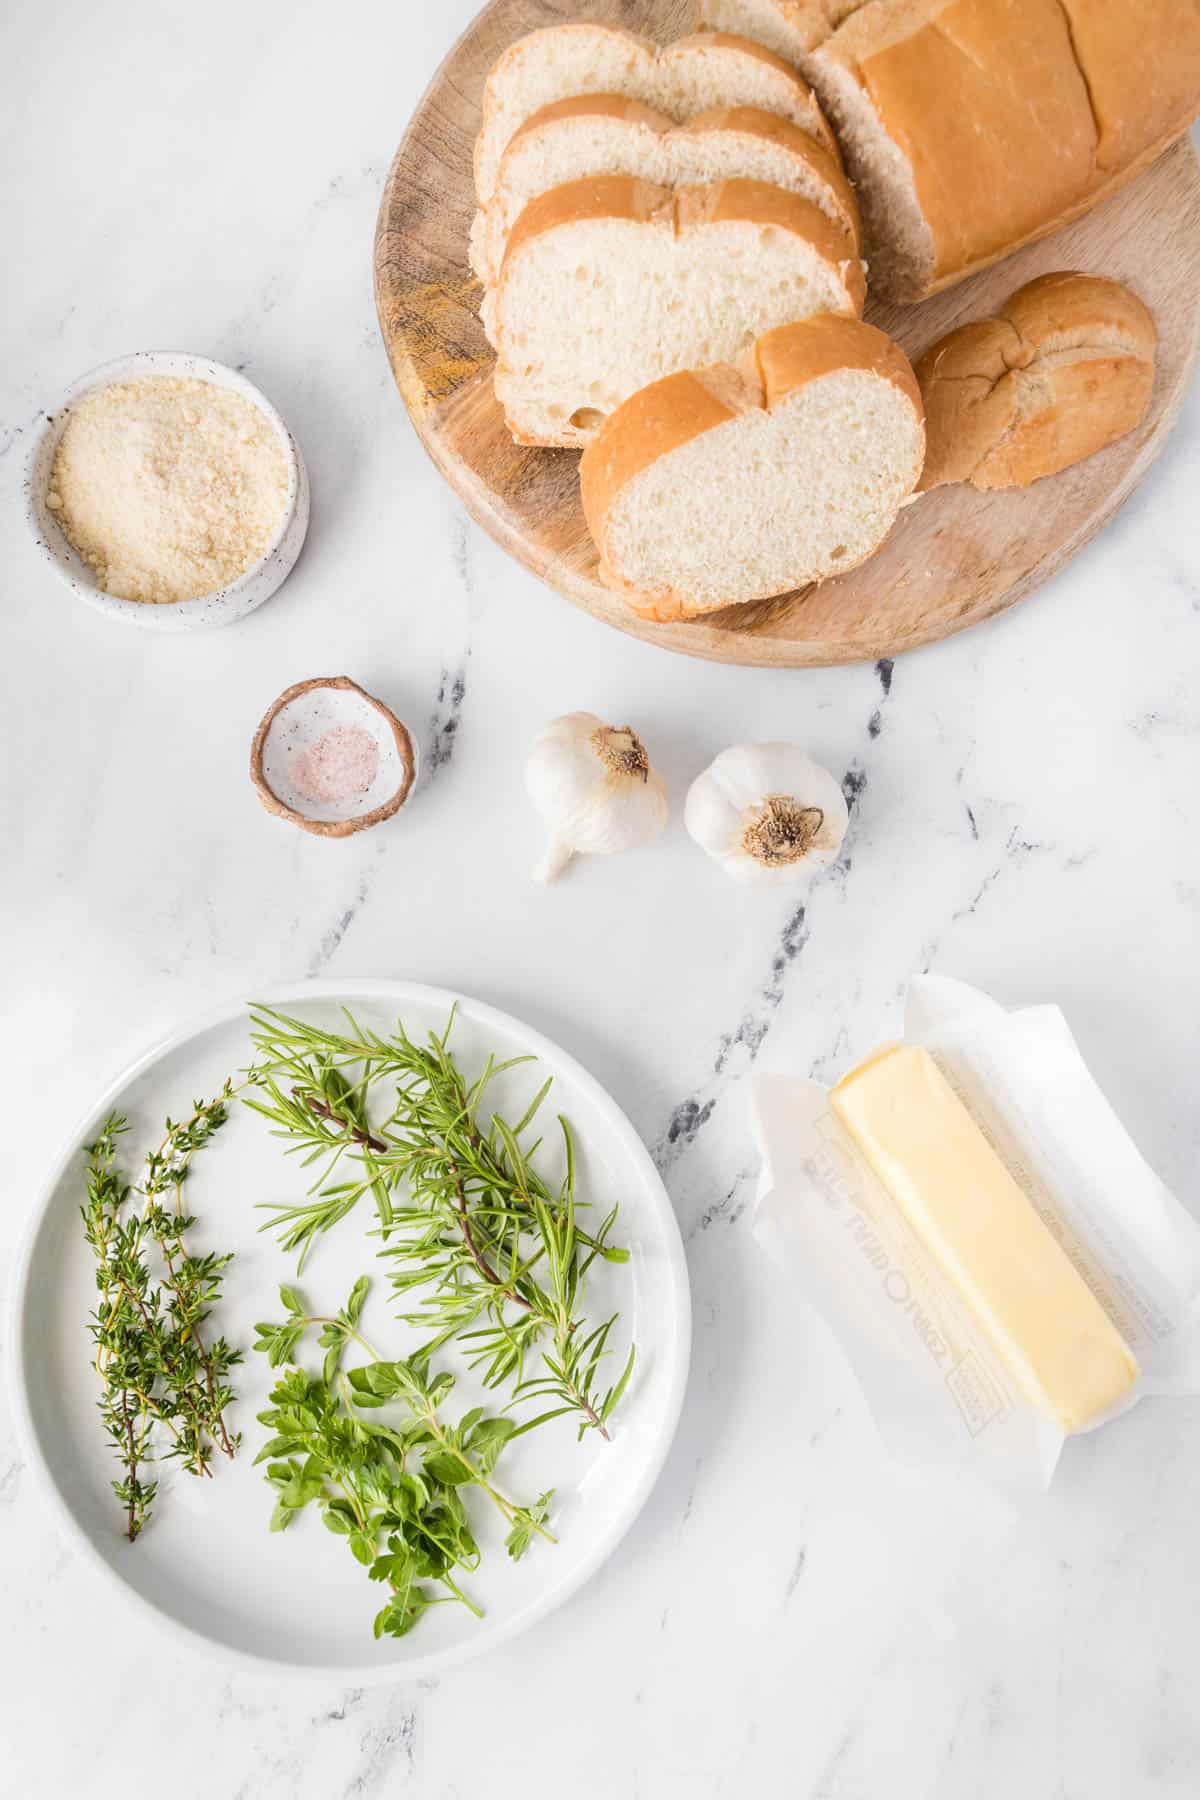 Ingredients for making homemade garlic bread.